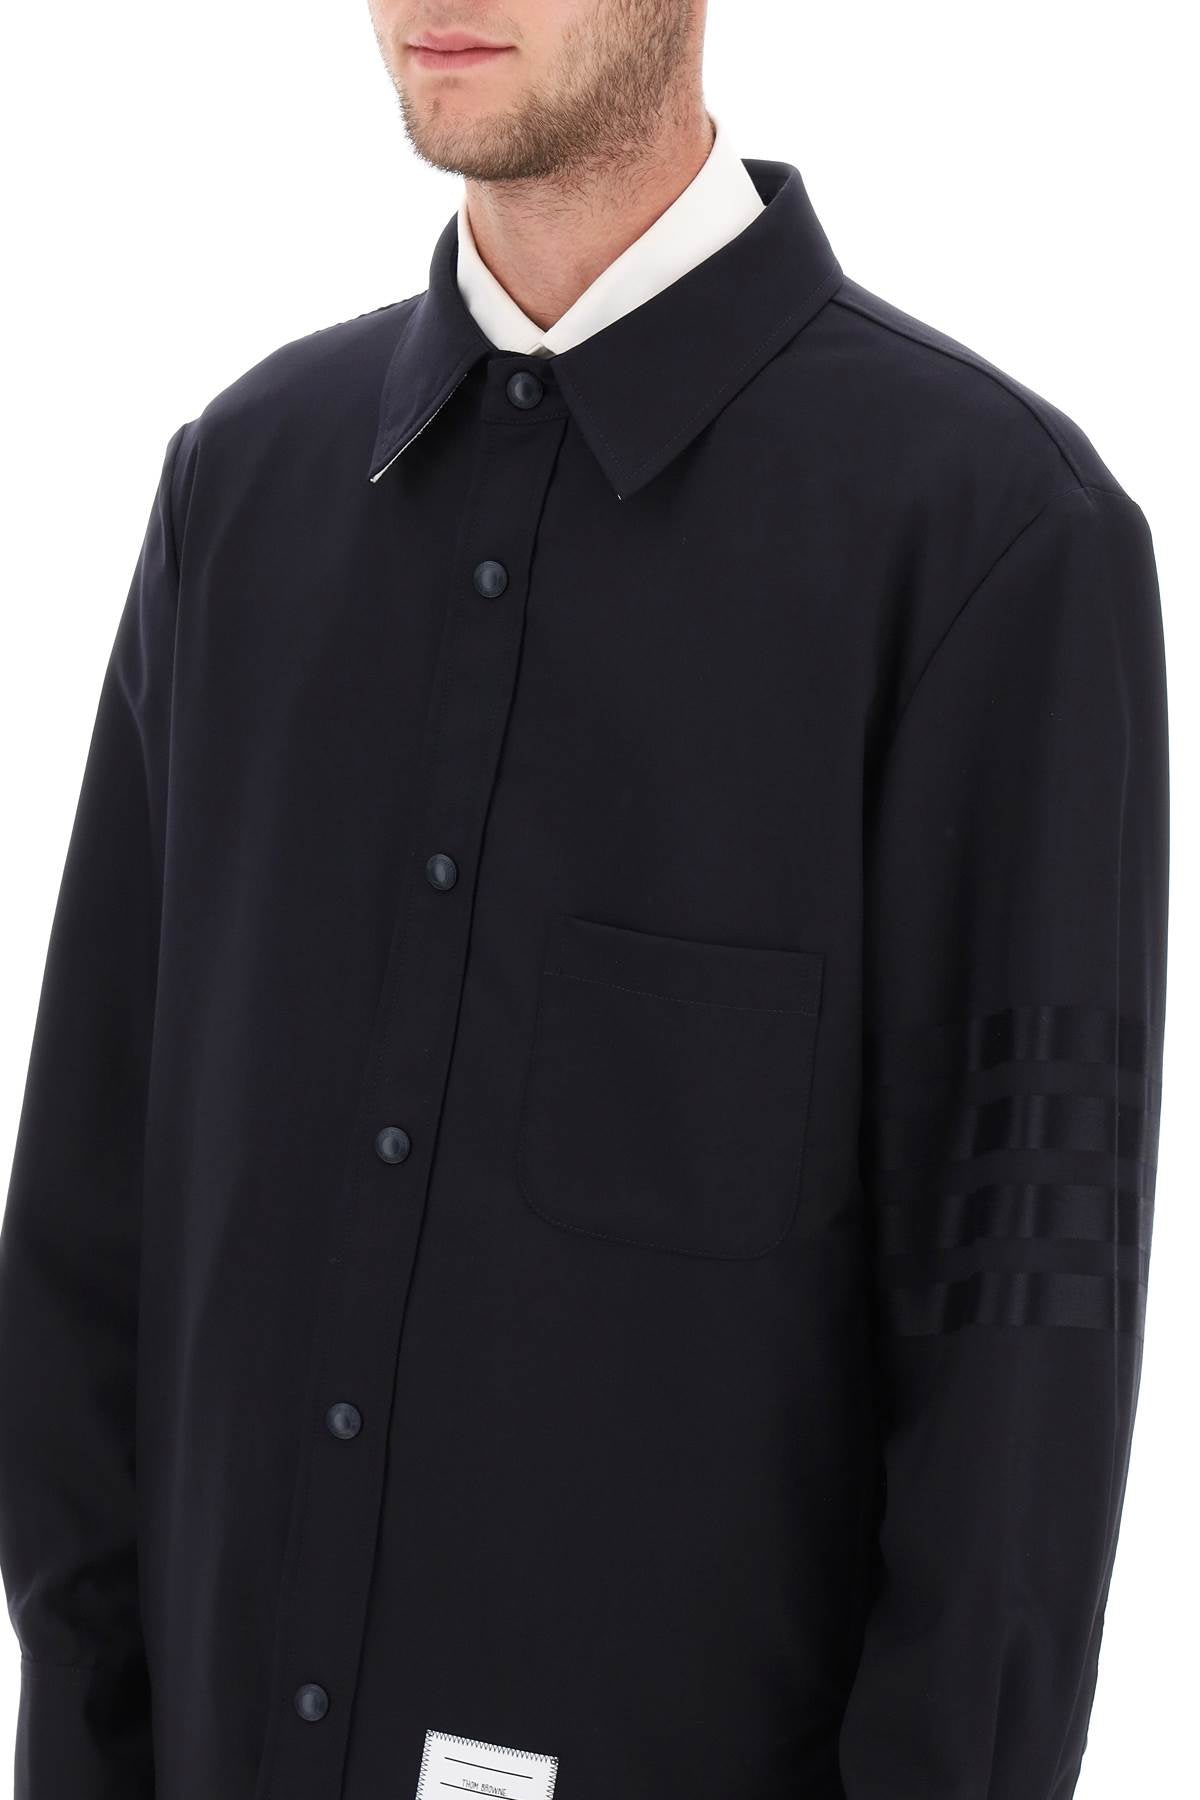 Thom browne 4-bar shirt in light wool-3